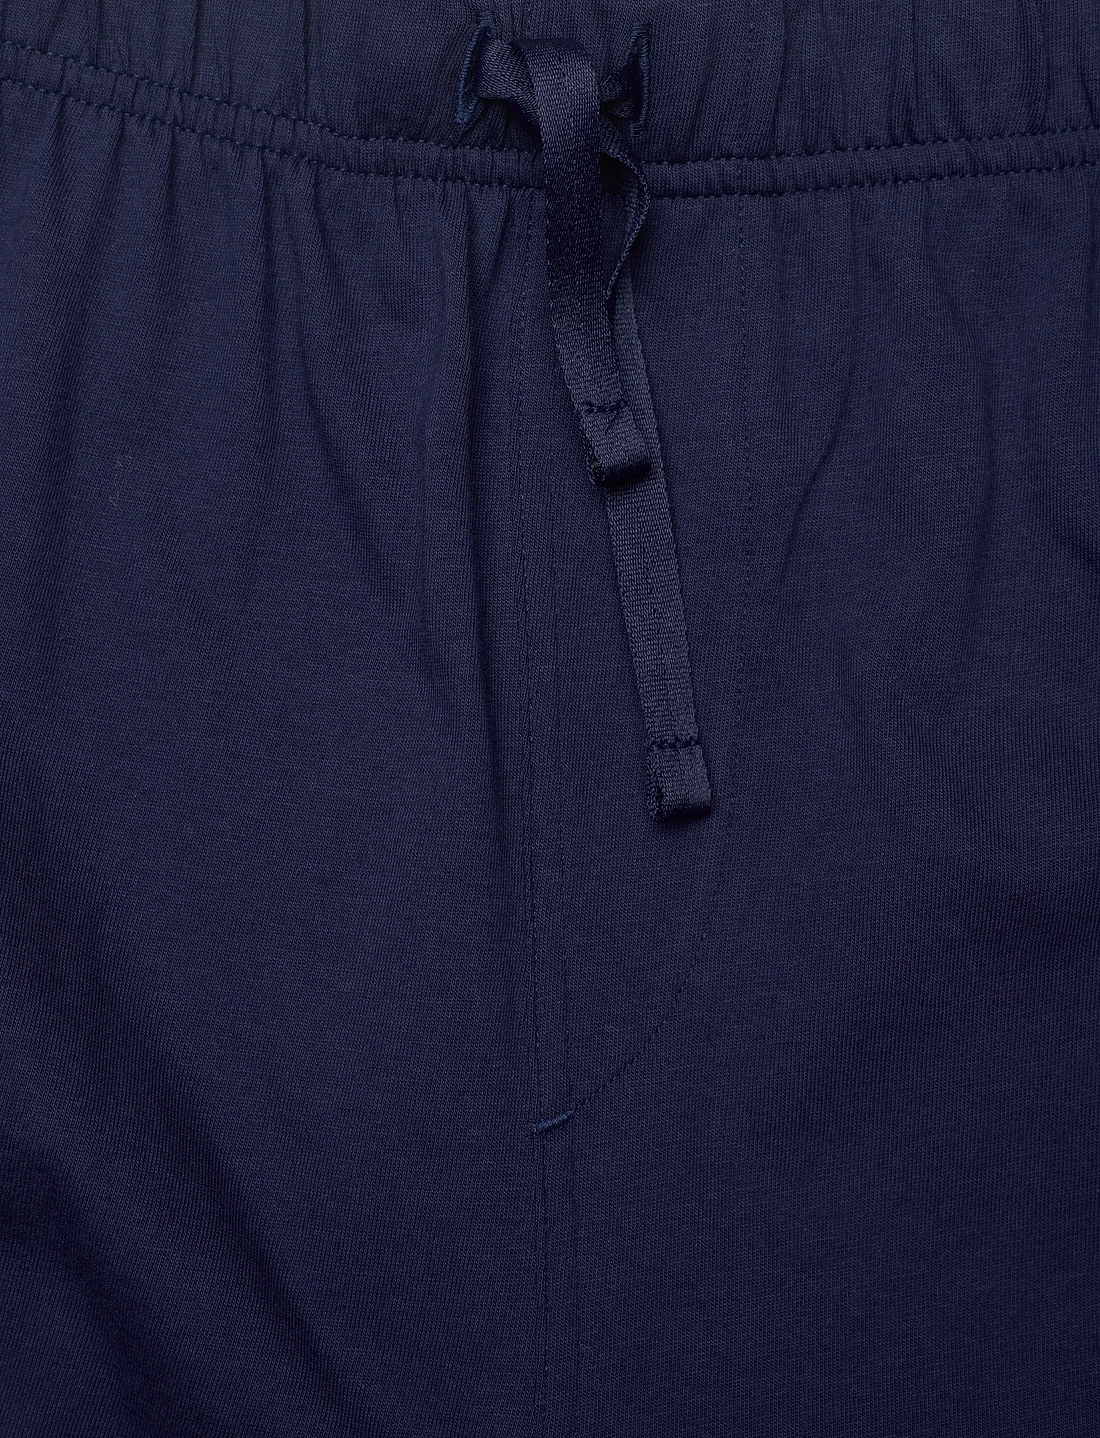 Polo Ralph Lauren Underwear Cotton Jersey Pajama Pant - Bottoms 